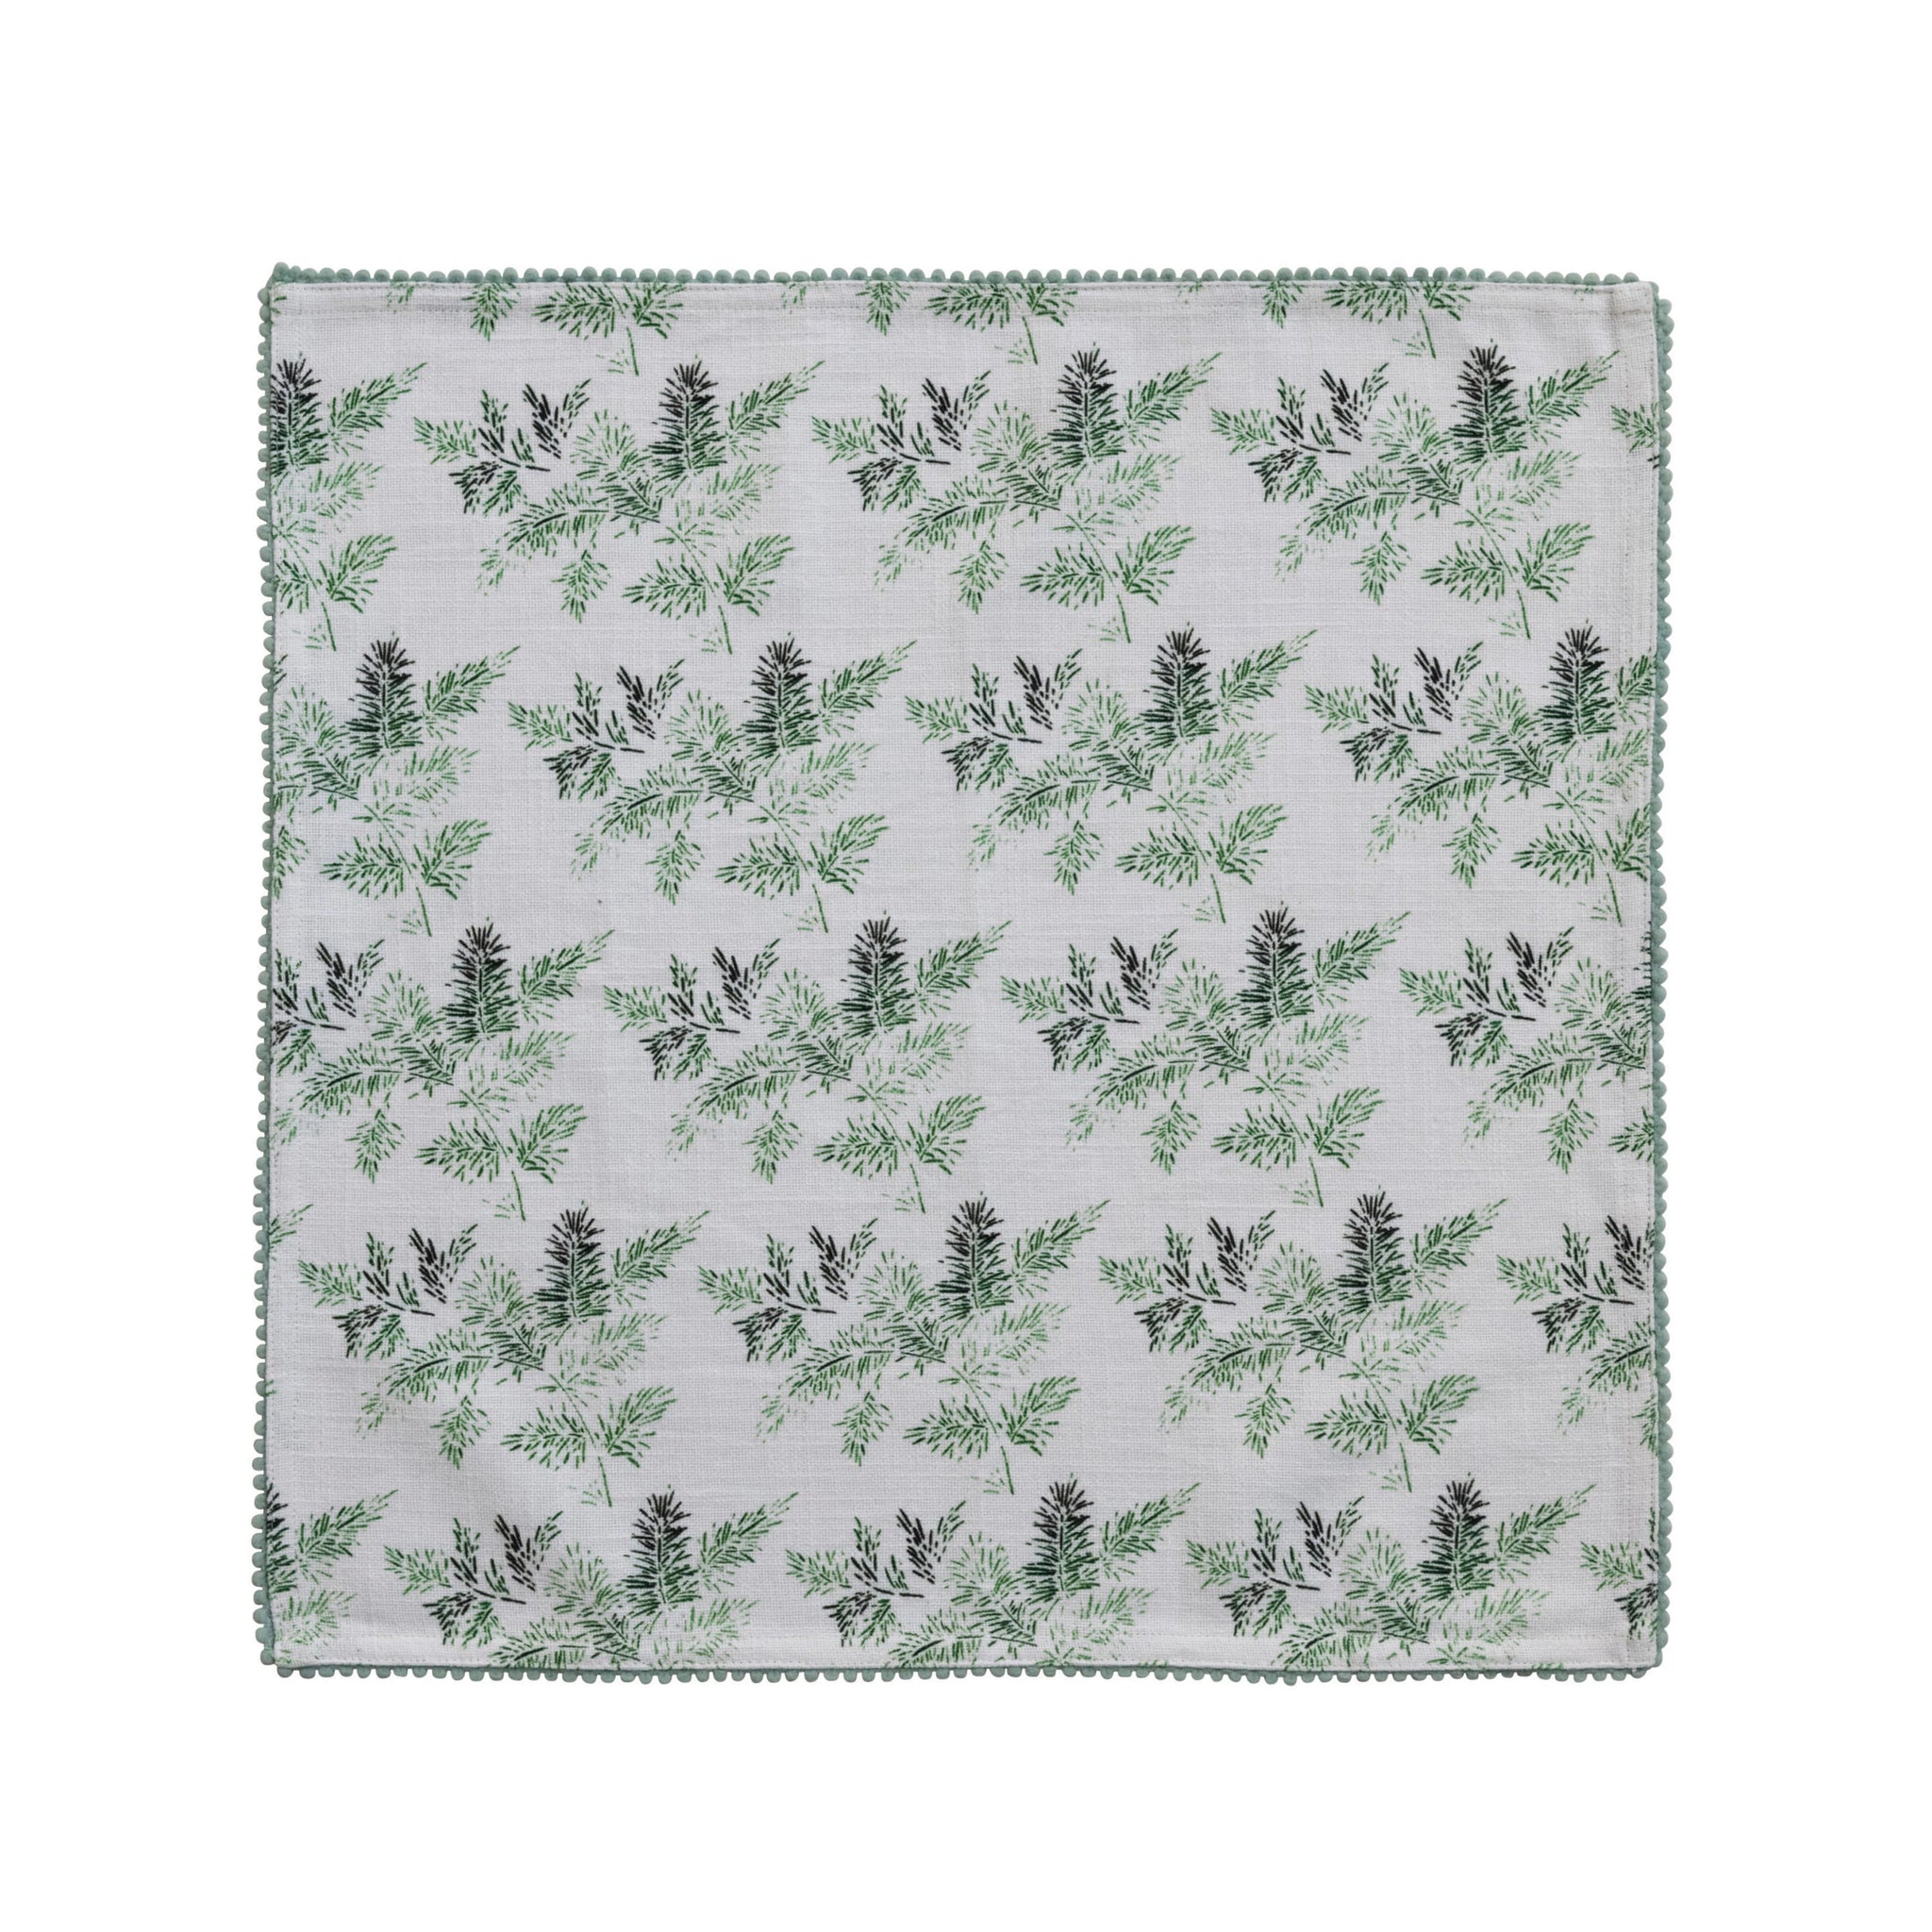 Square Cotton Napkins - Evergreen Print